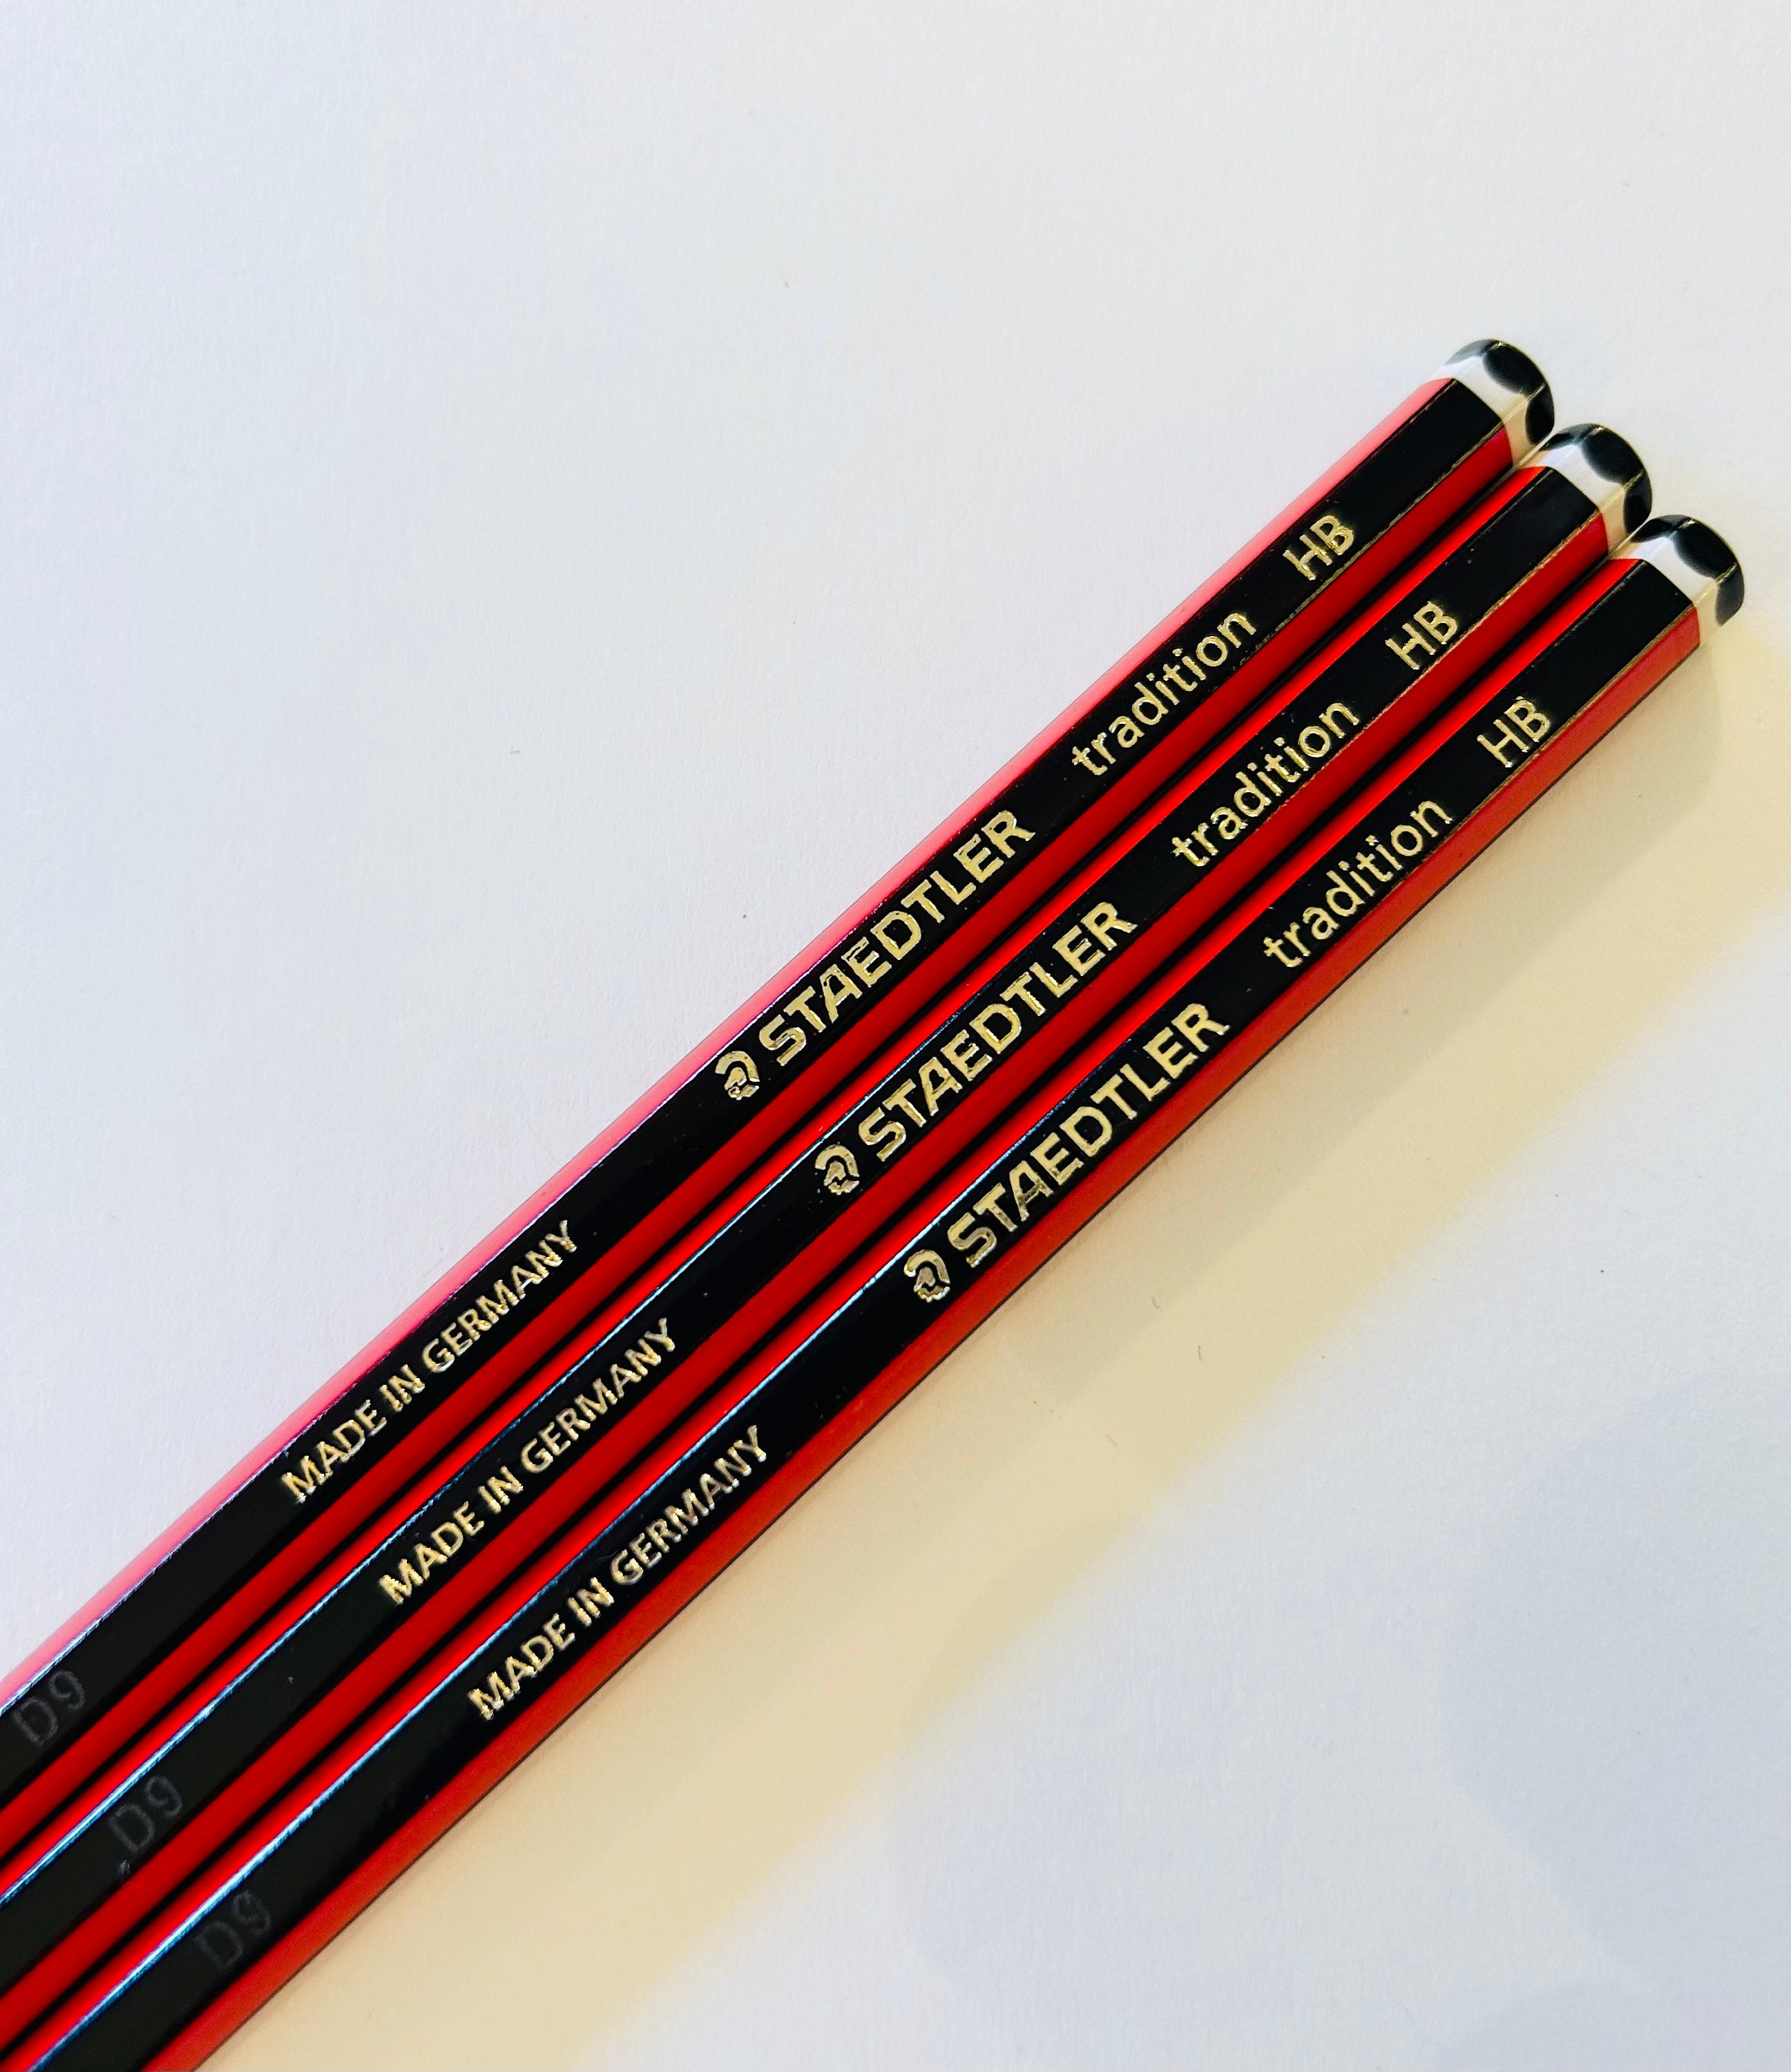 Black and Gold Pencil Set Black and Gold Pencils HB Pencil Set Stationery  Drawing Writing Pencils HB Pencils 